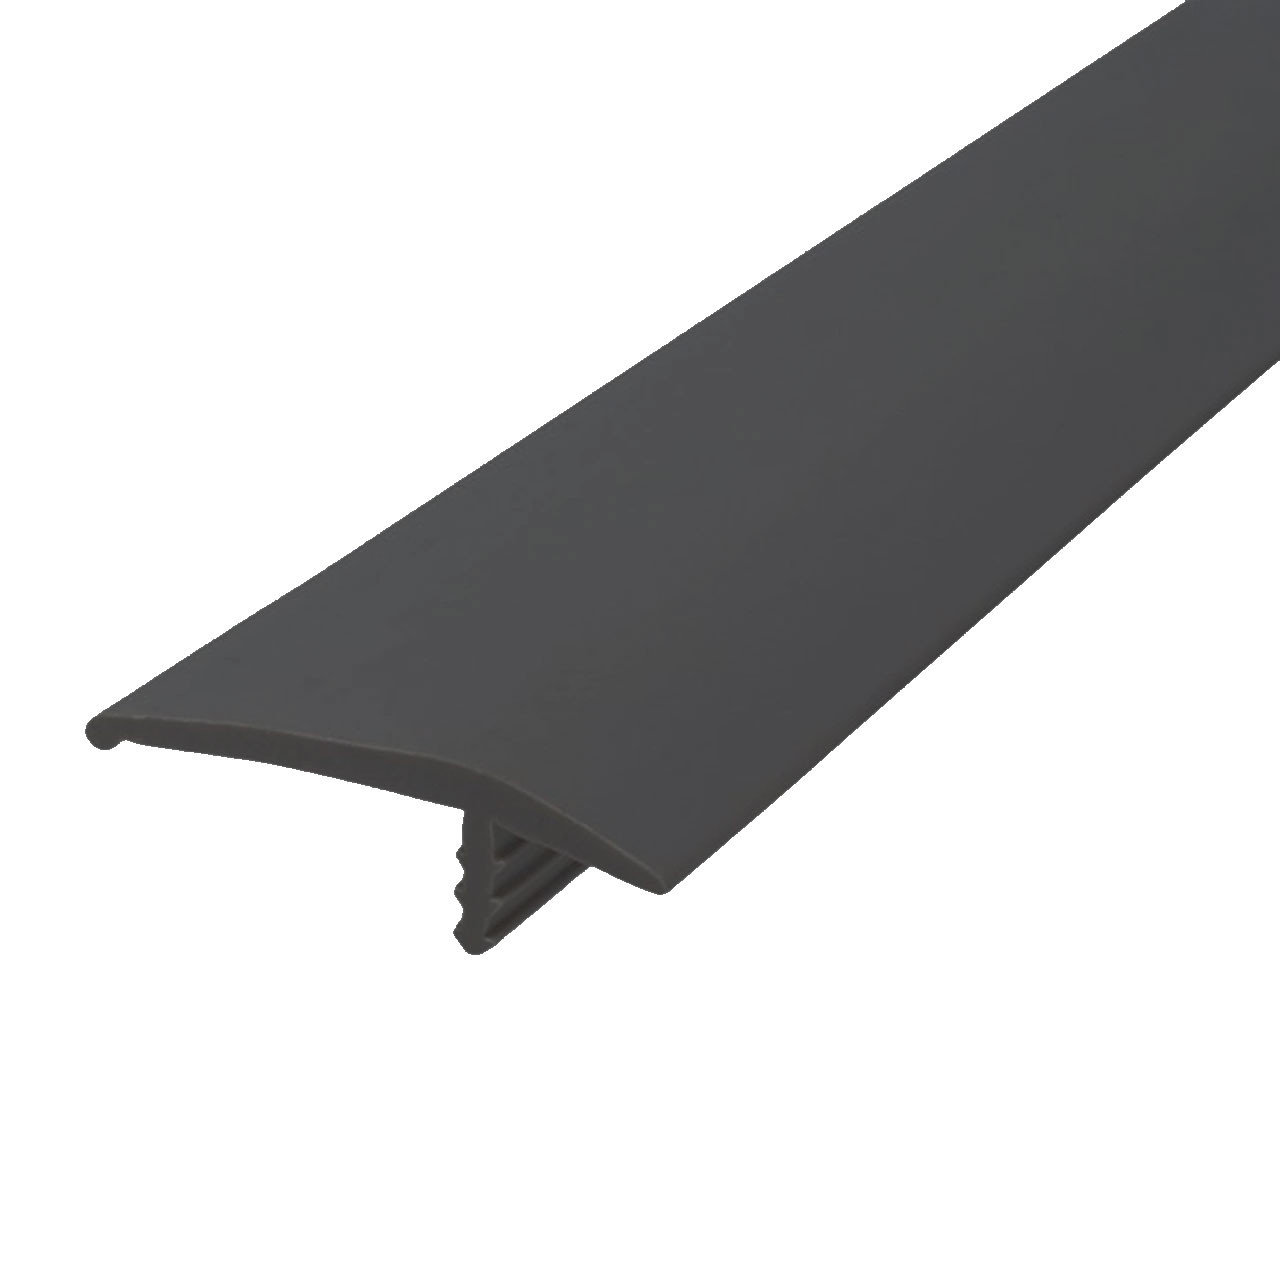 105-544-260-25 Plywood Edge Trim T Molding 1-1/4" - Black - 25 Feet